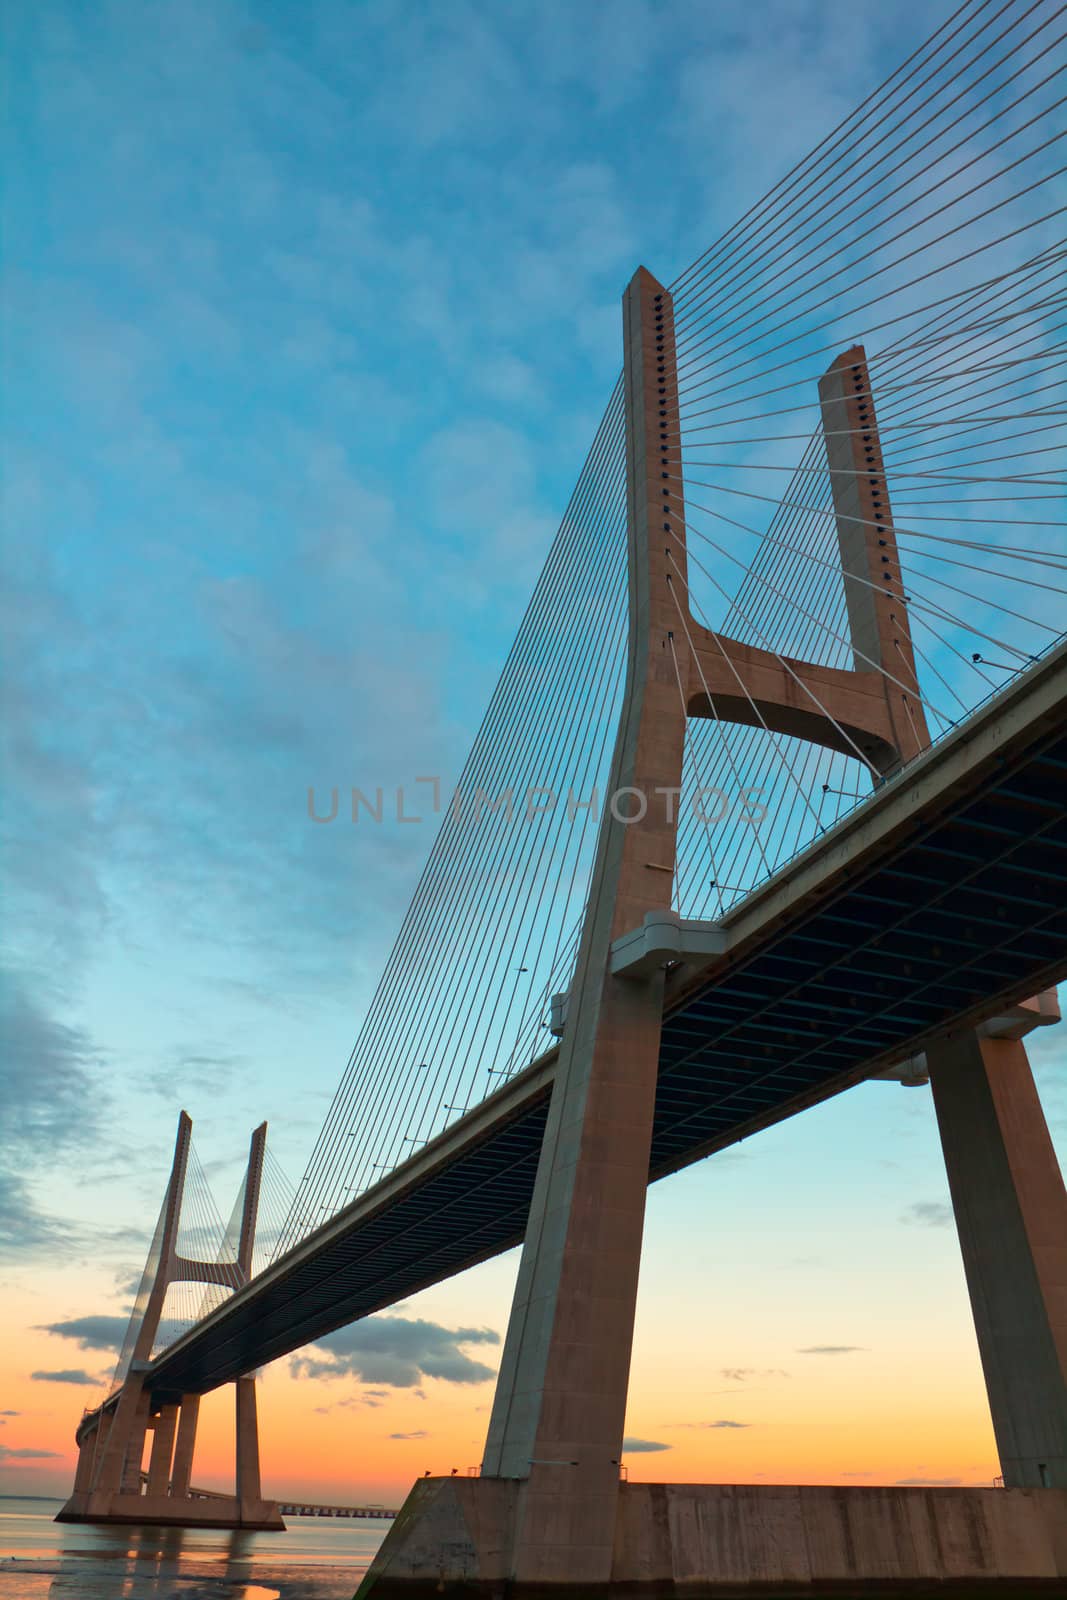  Long Vasco da Gama Bridge at sunset